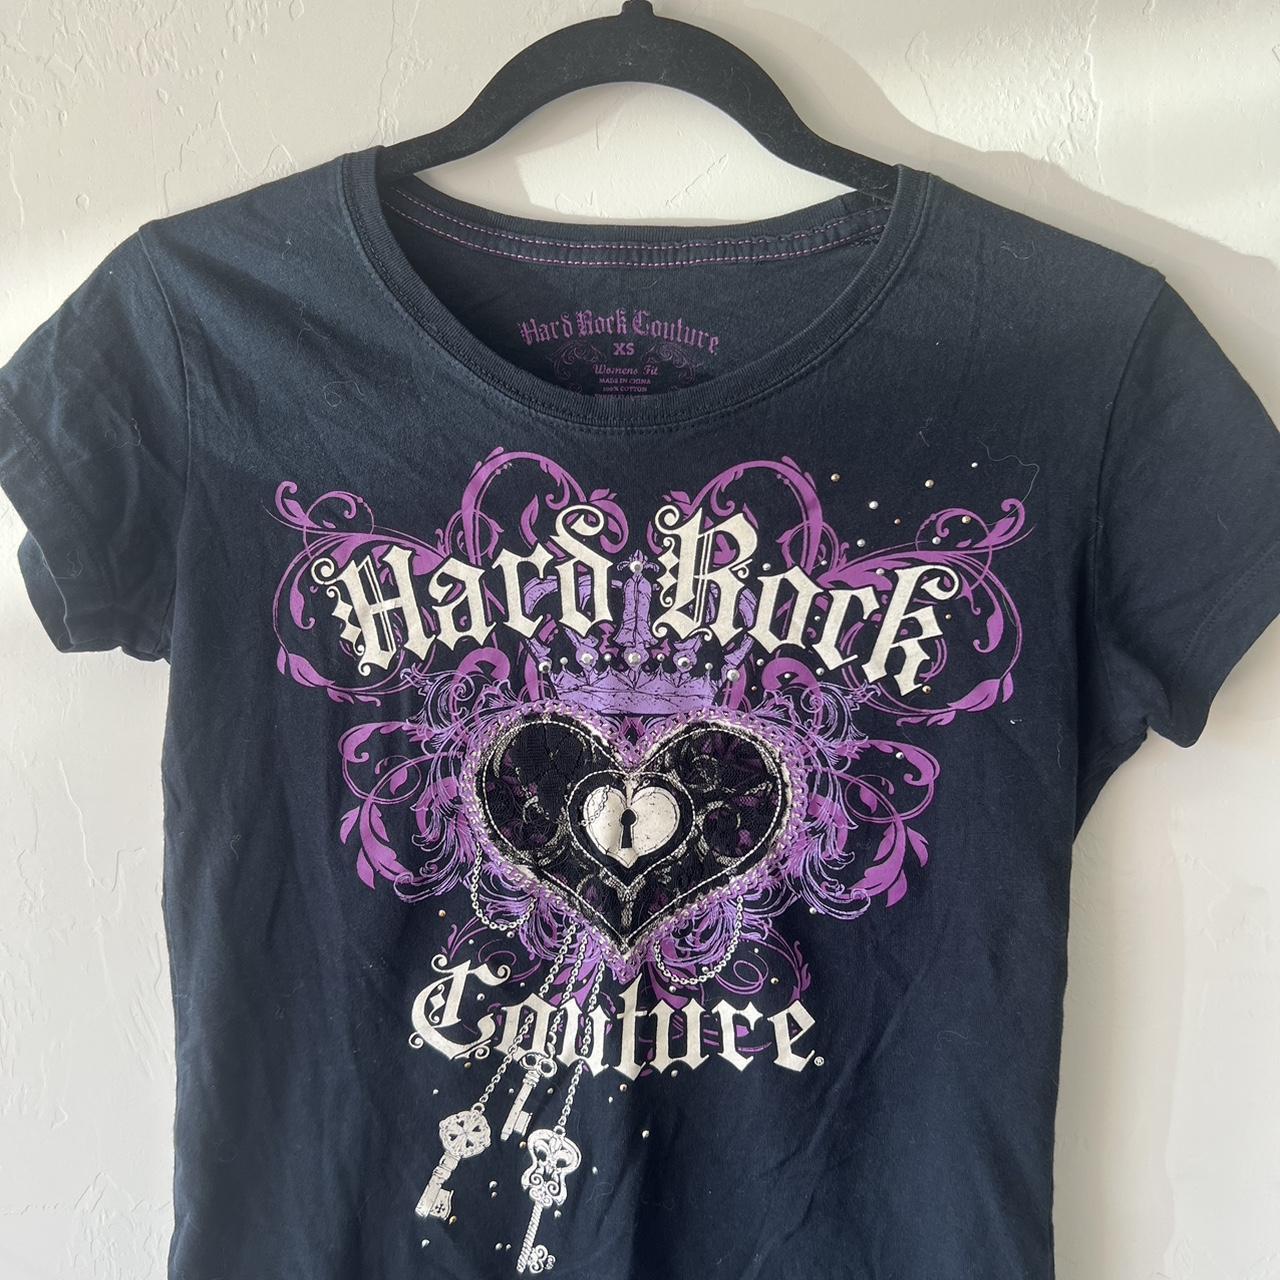 Hard Rock Cafe Women's Black and Purple Shirt | Depop